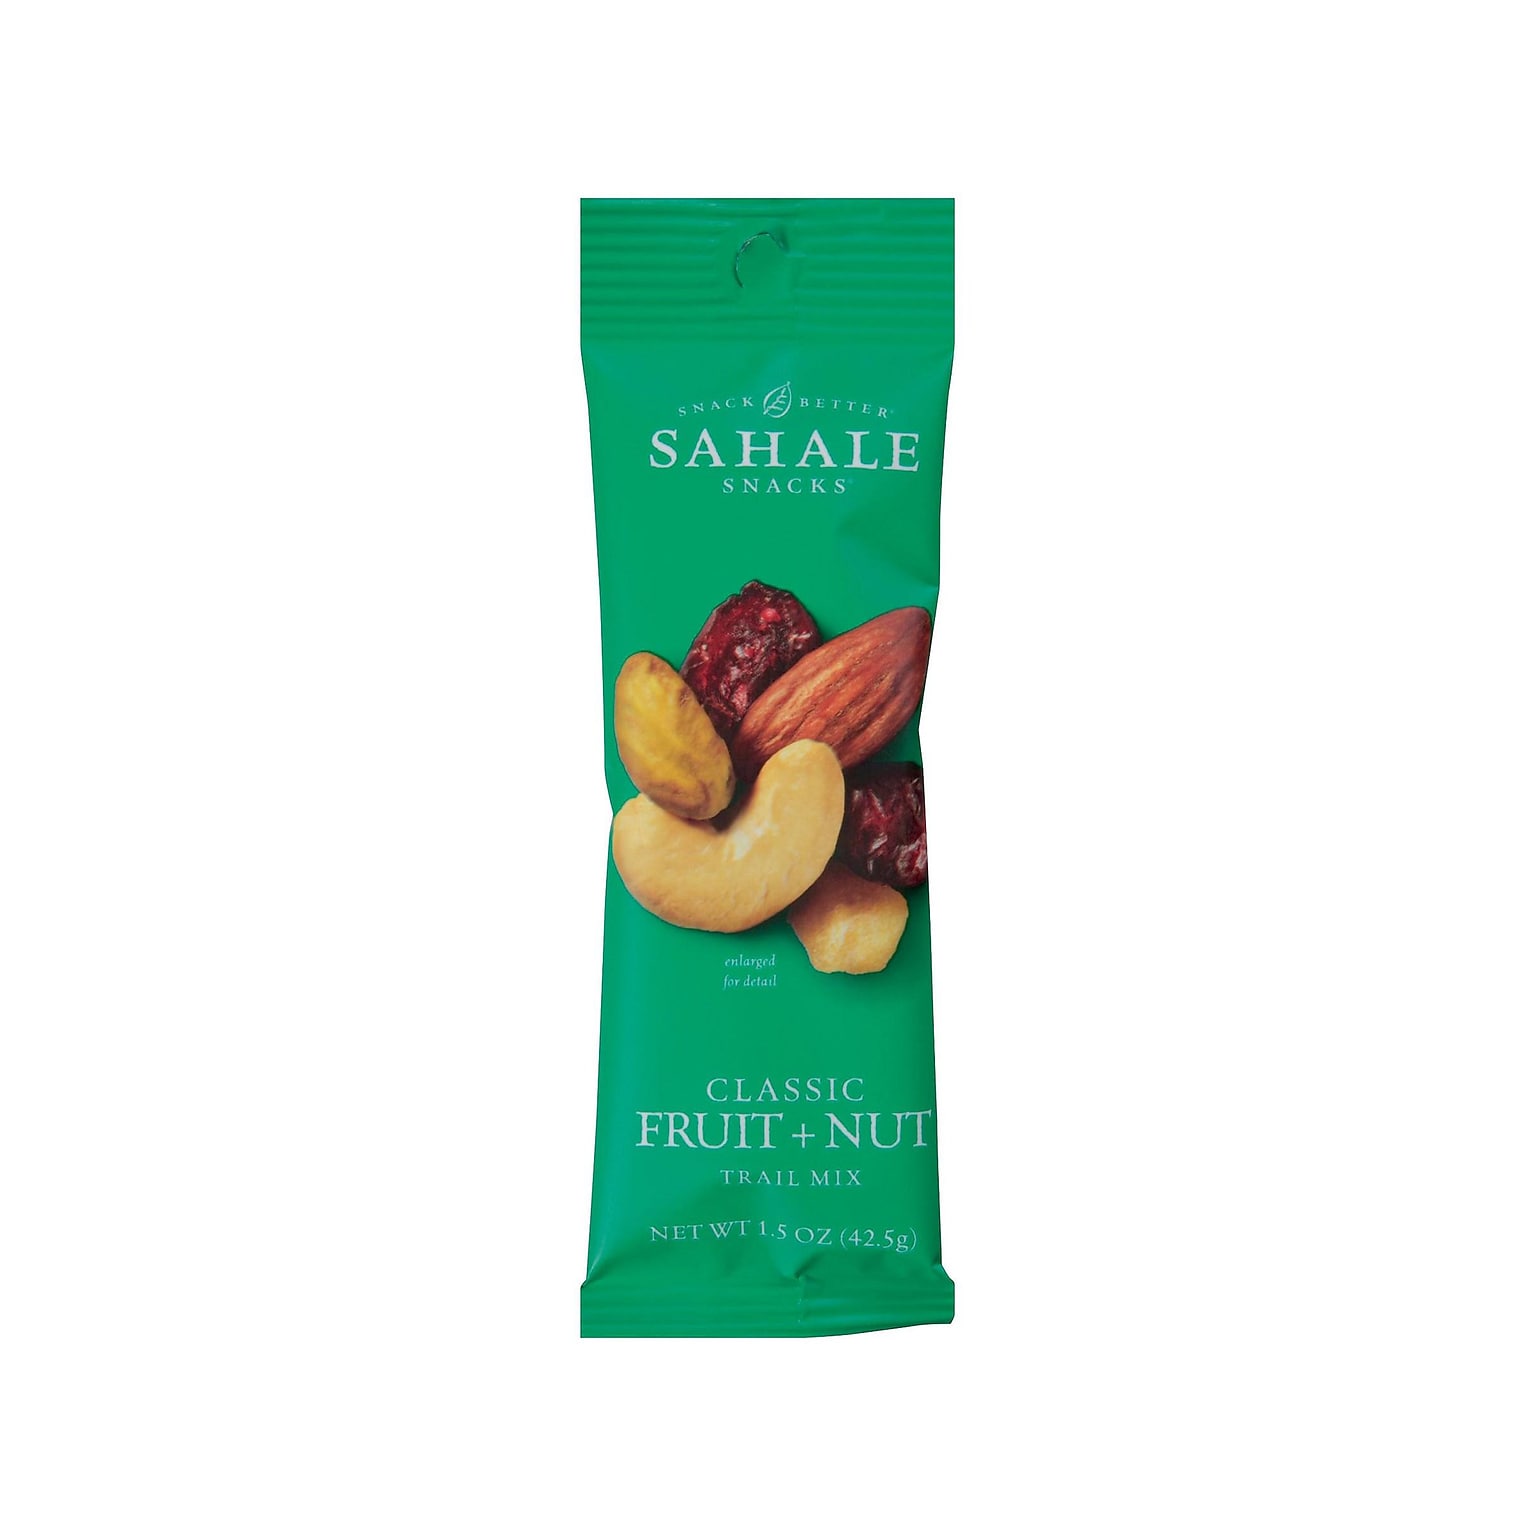 Sahale Snacks Snack Mix, Fruit & Nut, 1.5 Oz., 18/Carton (SMU00330)